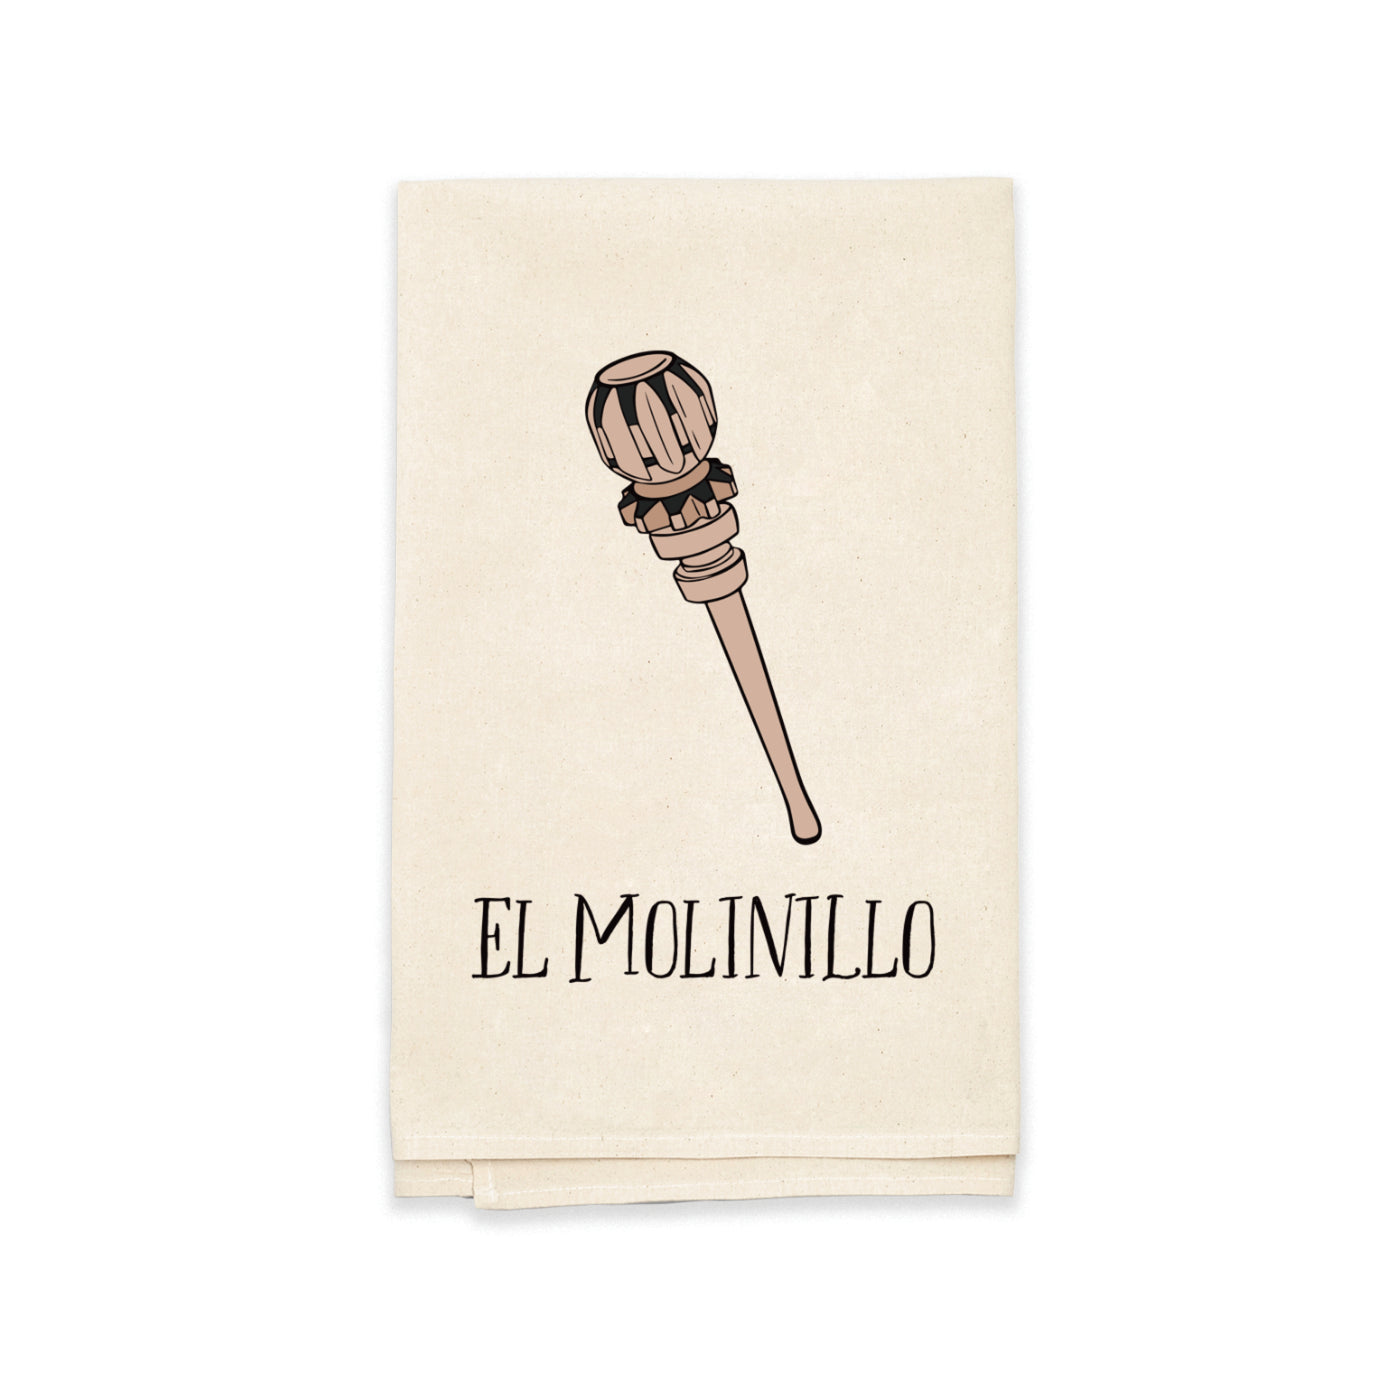 El Molinillo Tea Towel features an illustration of a wooden molinillo and reads "El Molinillo" underneath"